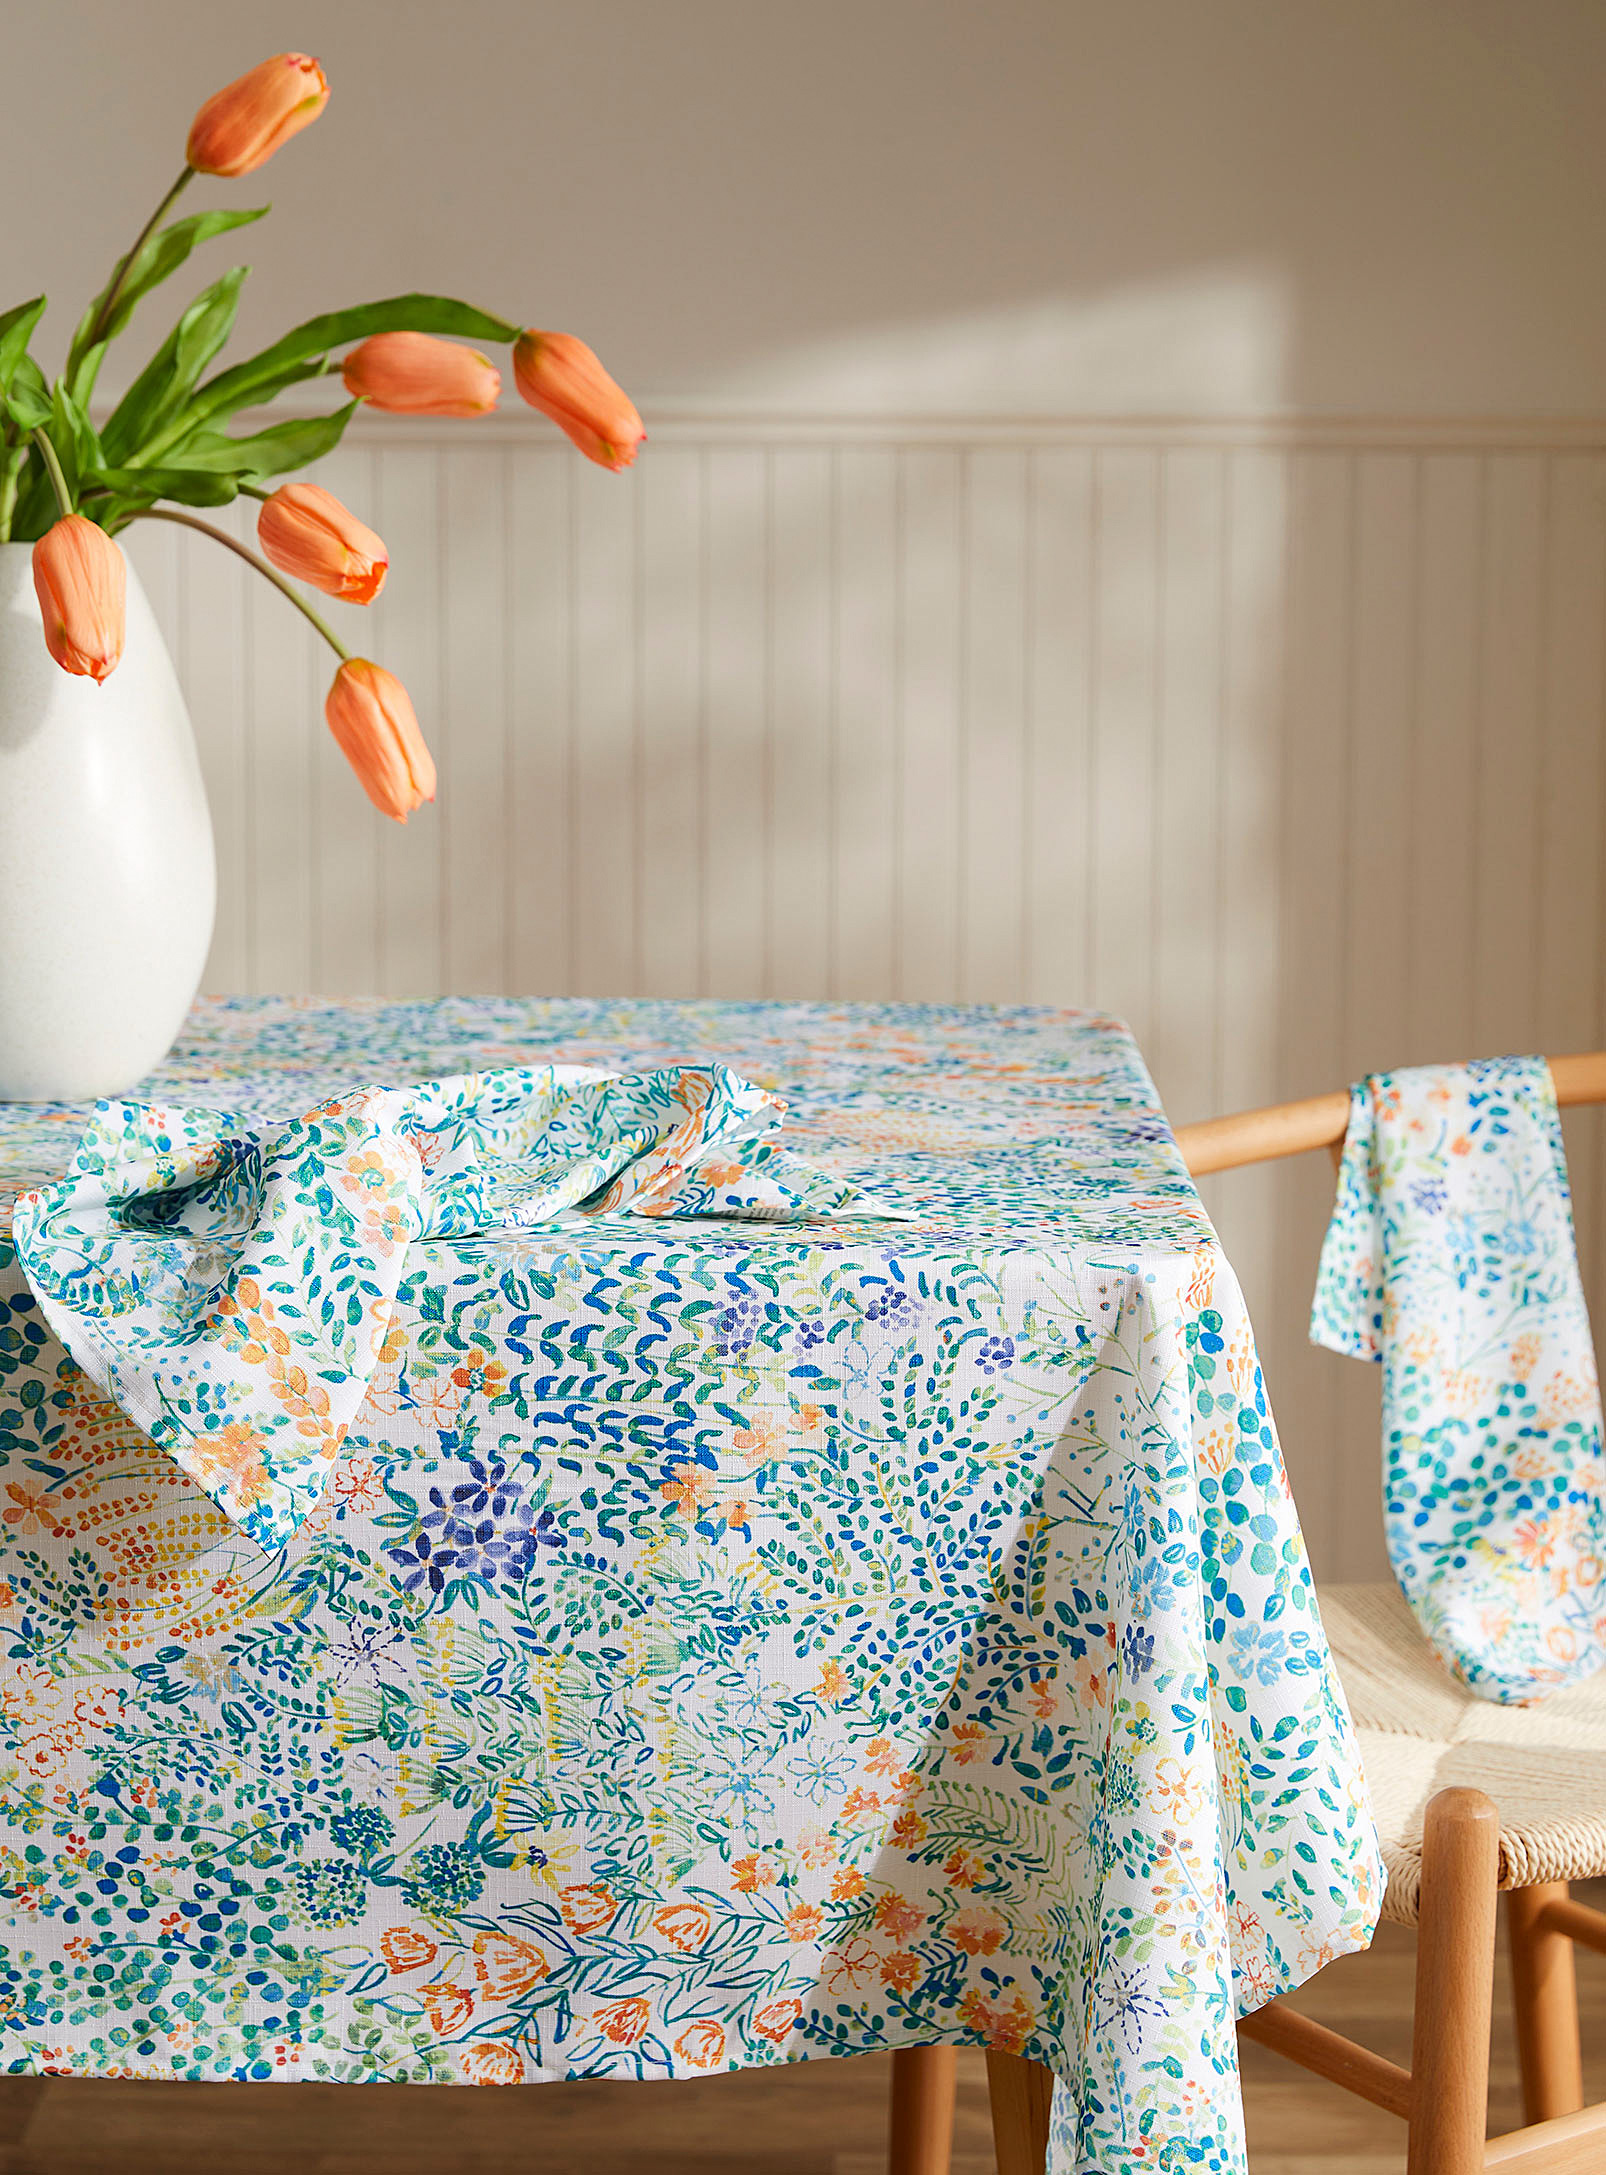 Simons Maison - Blossoming prairie tablecloth